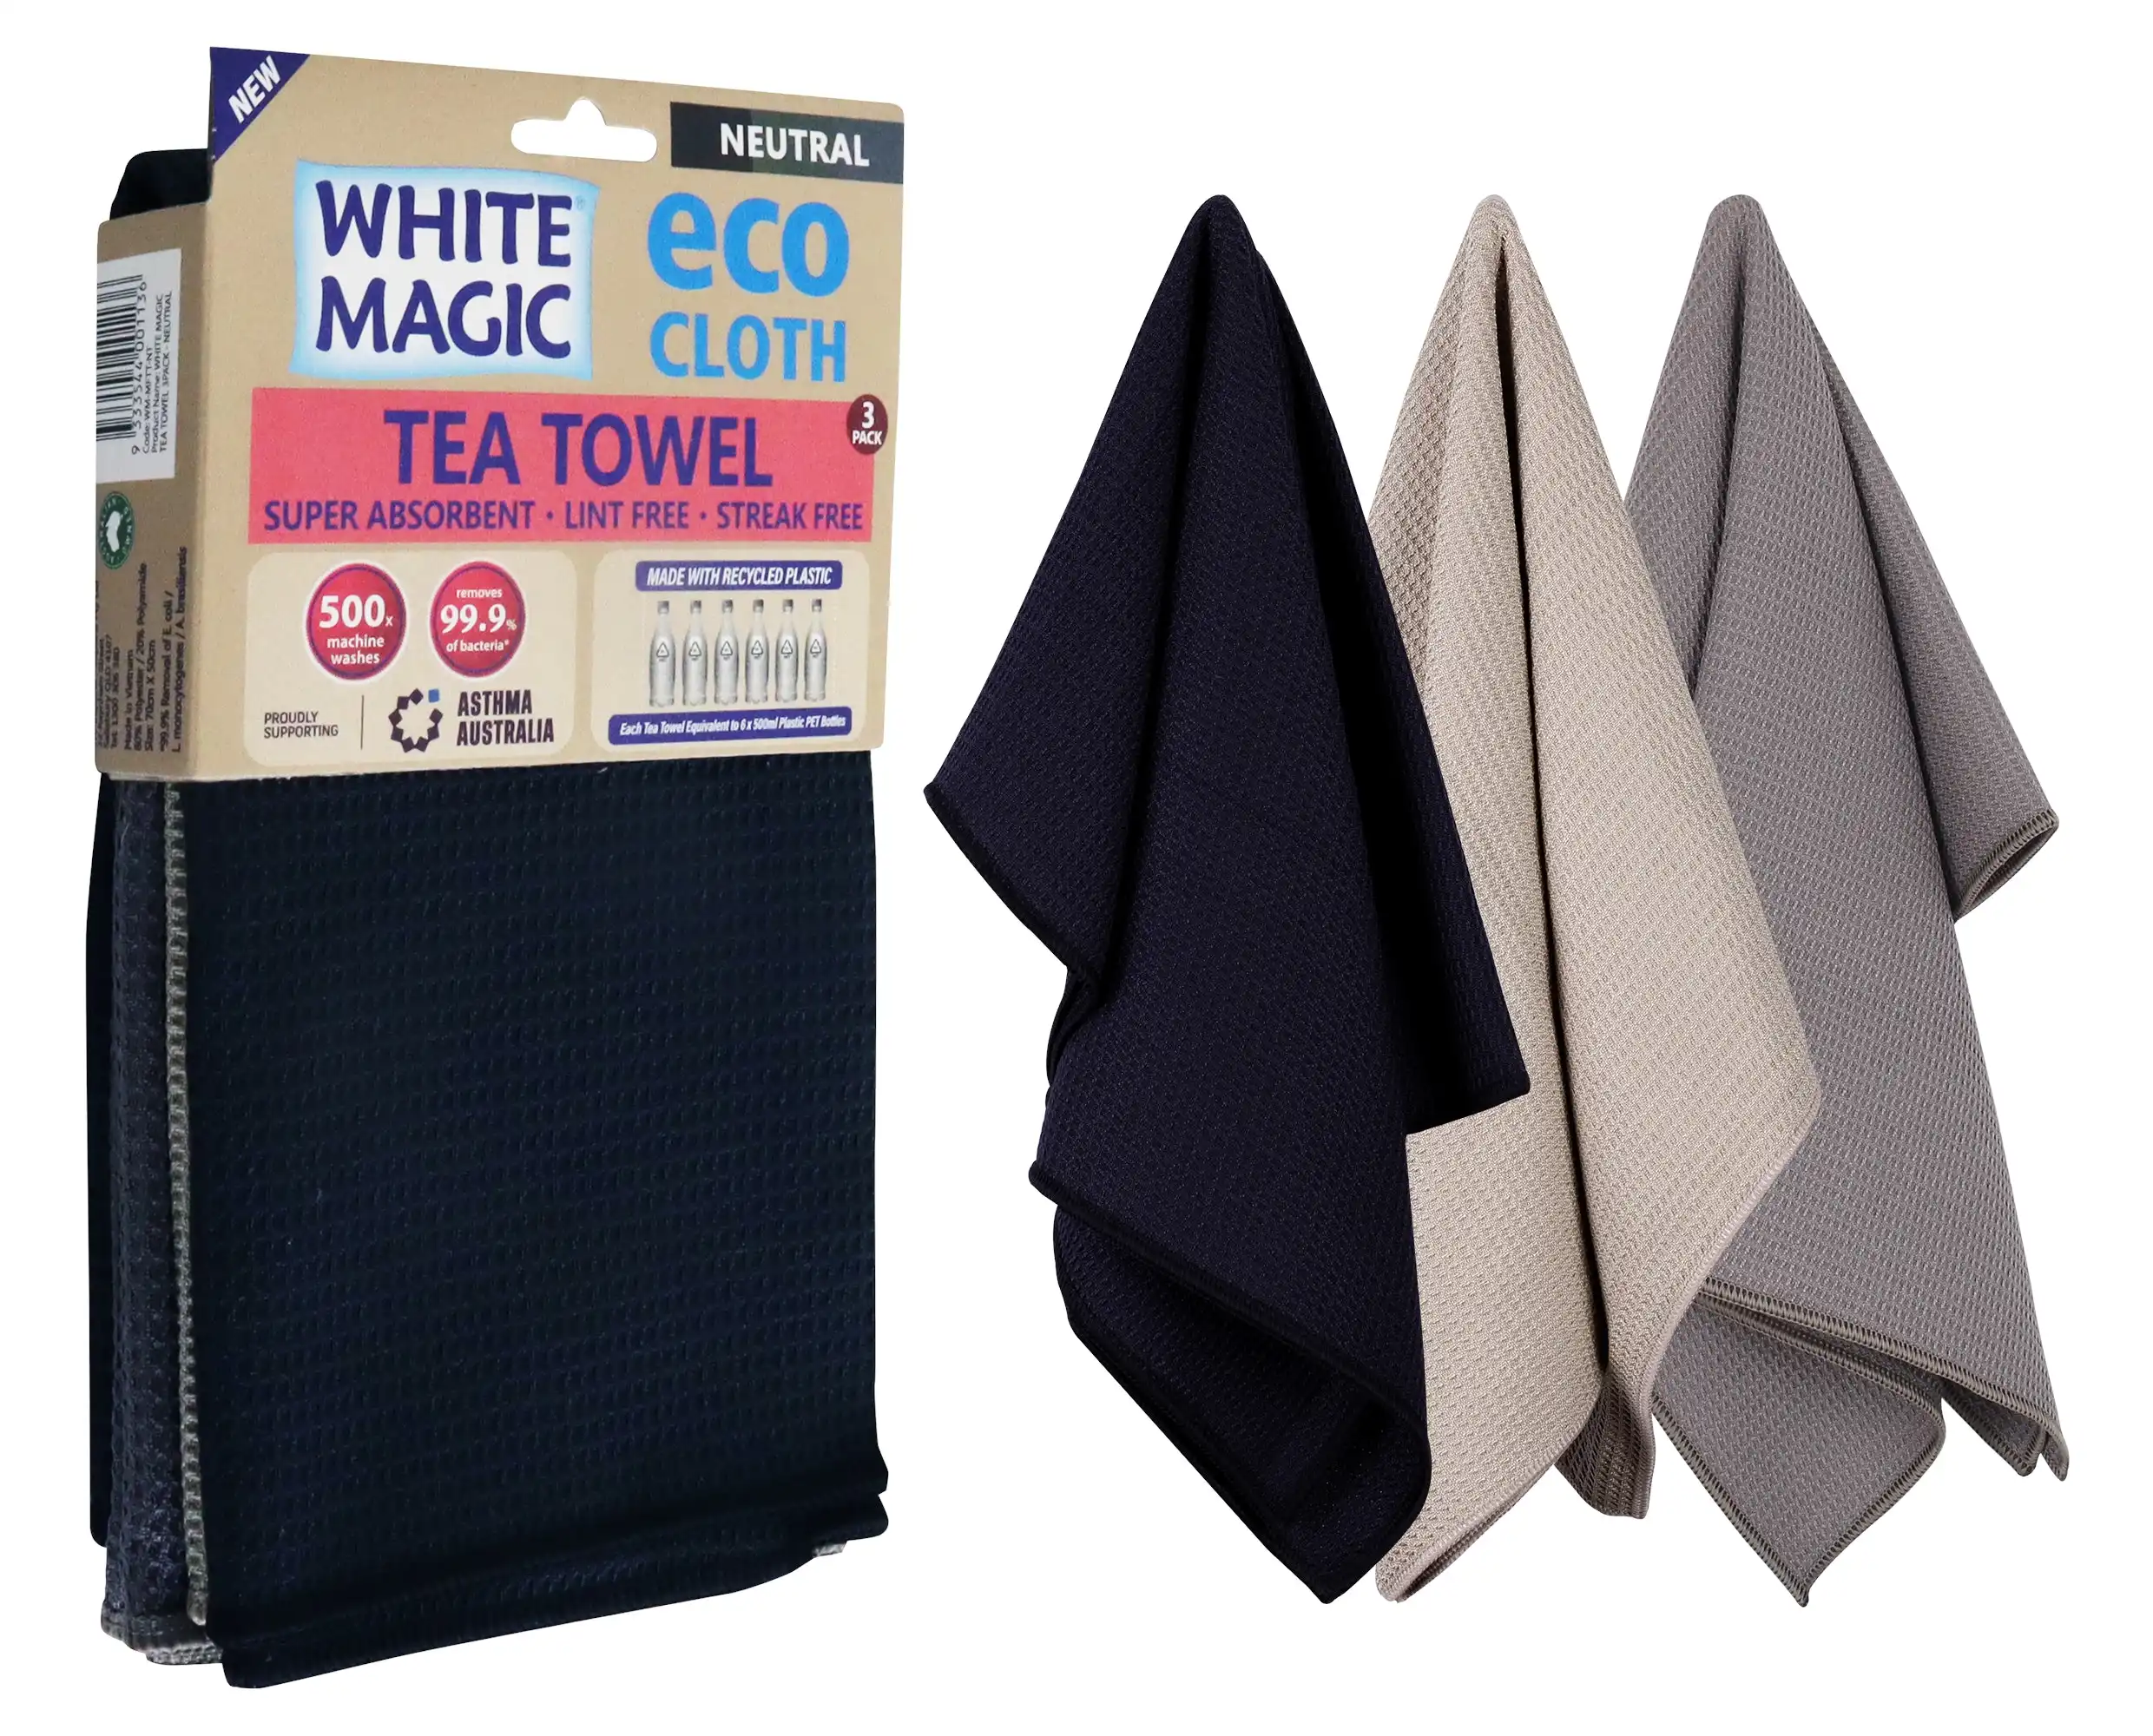 White Magic Eco Cloth Tea Towel 3 Pack - Neutral